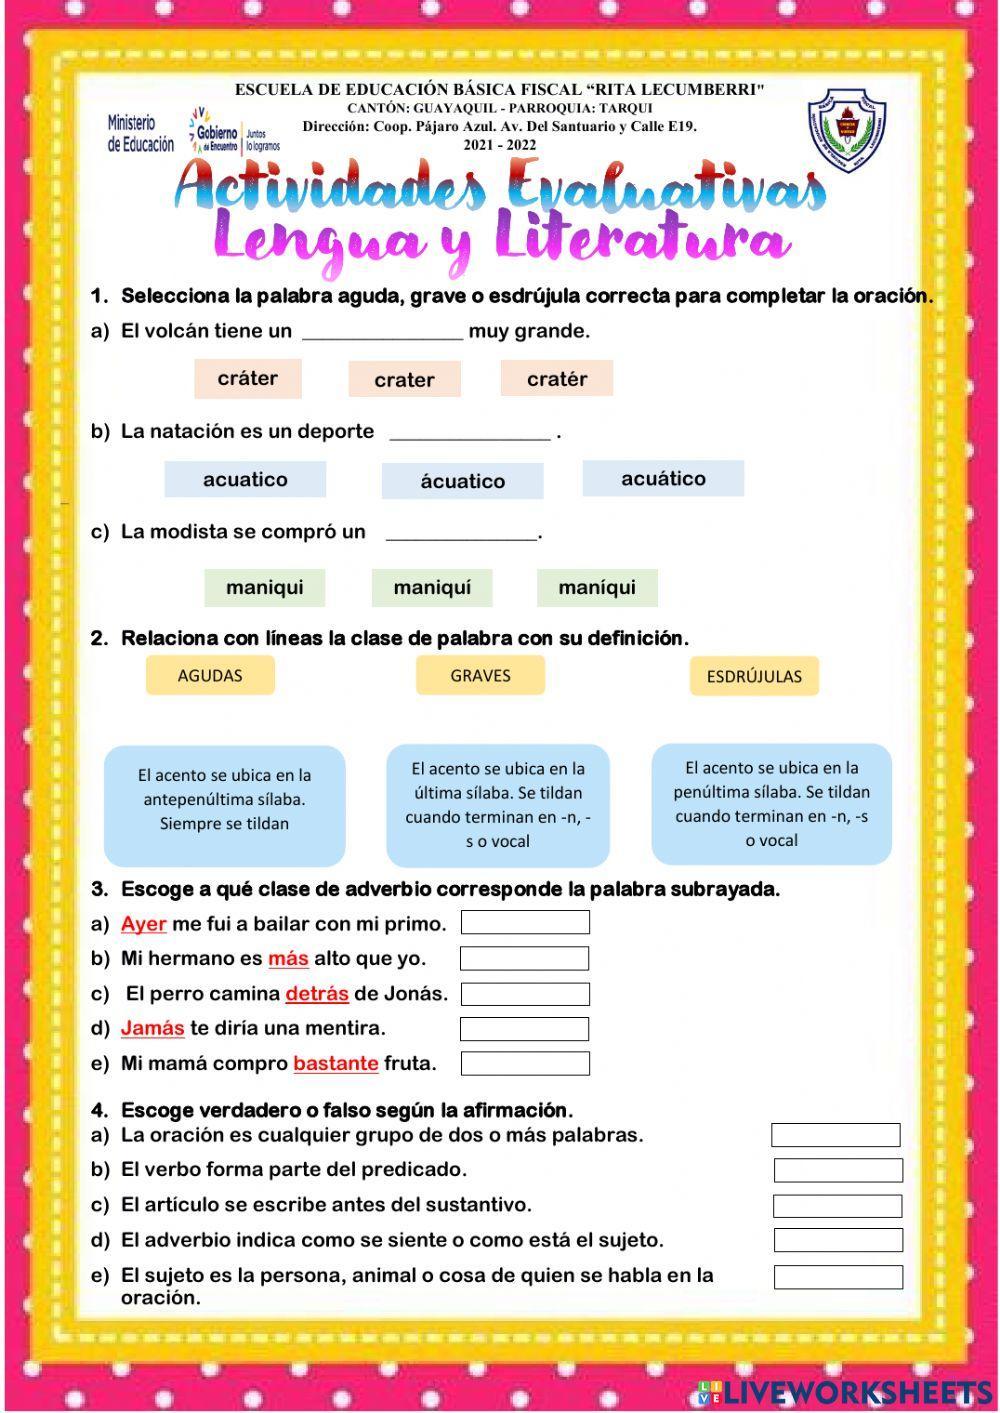 Evaluación Lengua y Literatura free online worksheet | Live Worksheets